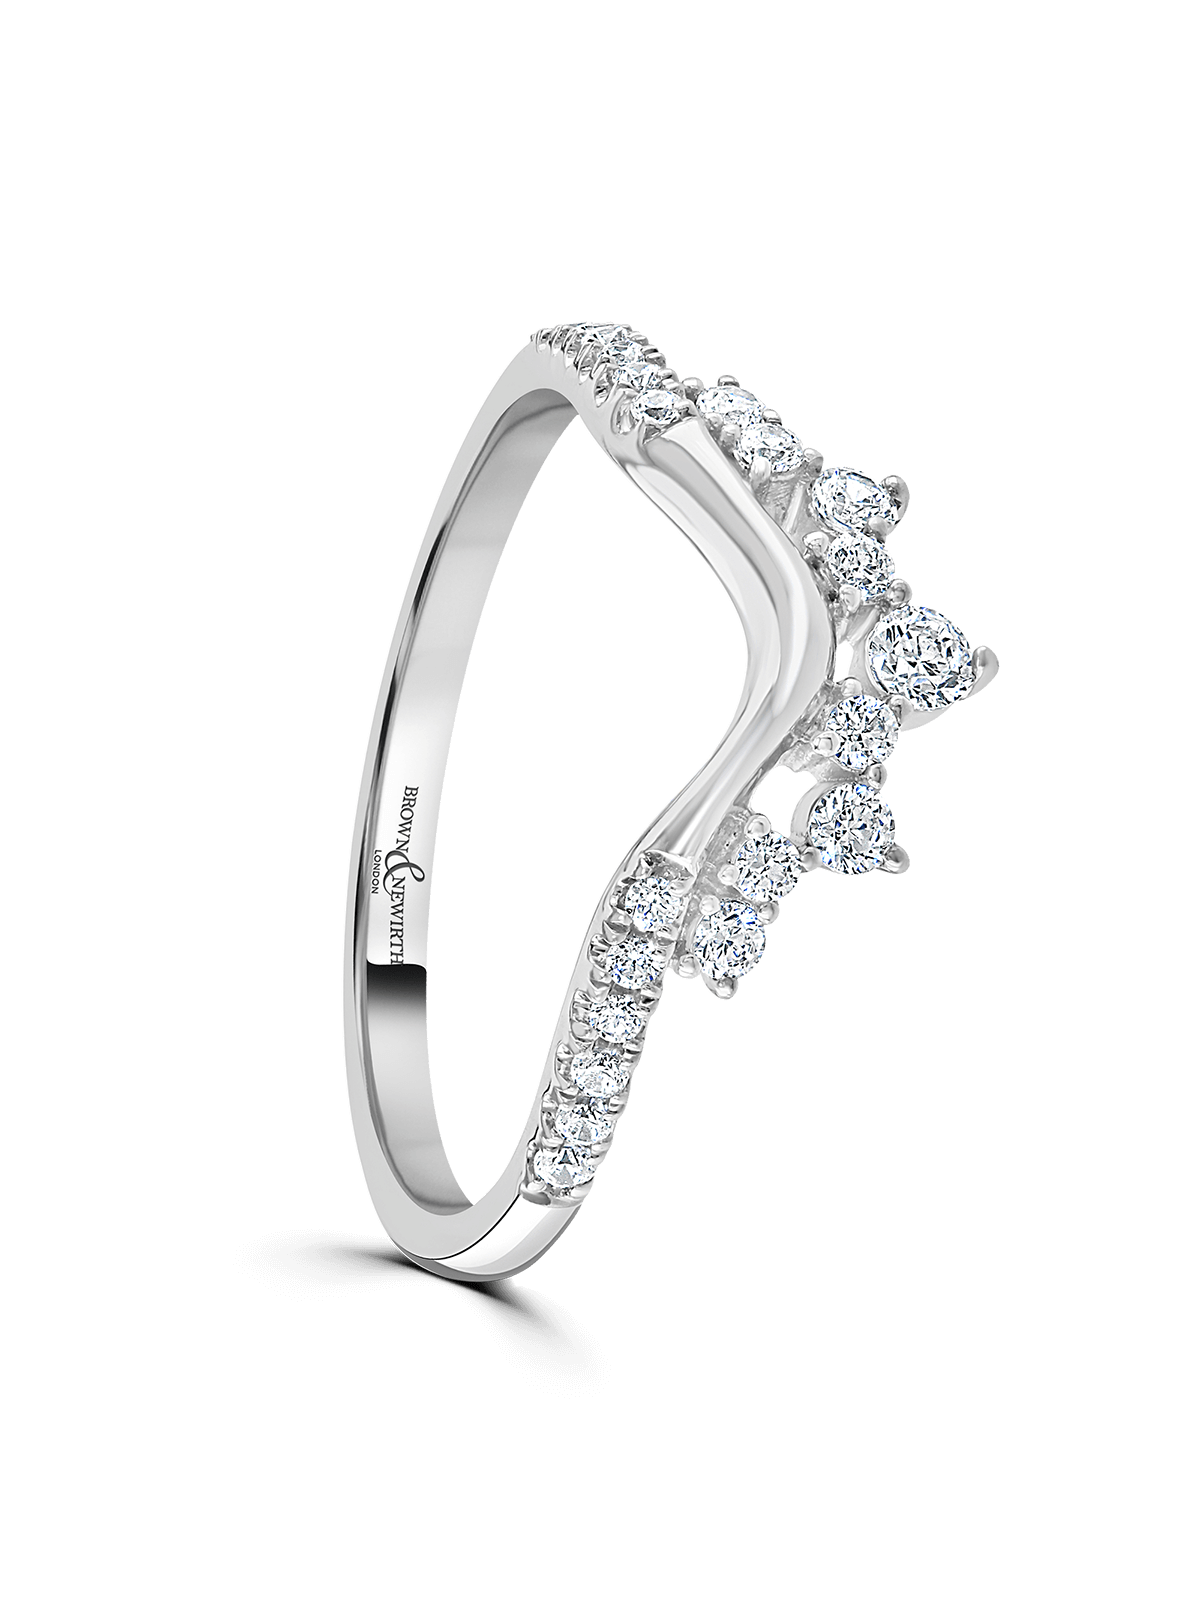 Brown & Newirth Royal 0.25ct Brilliant Cut Diamond Tiara Ring in Platinum with Diamond Set Shoulders